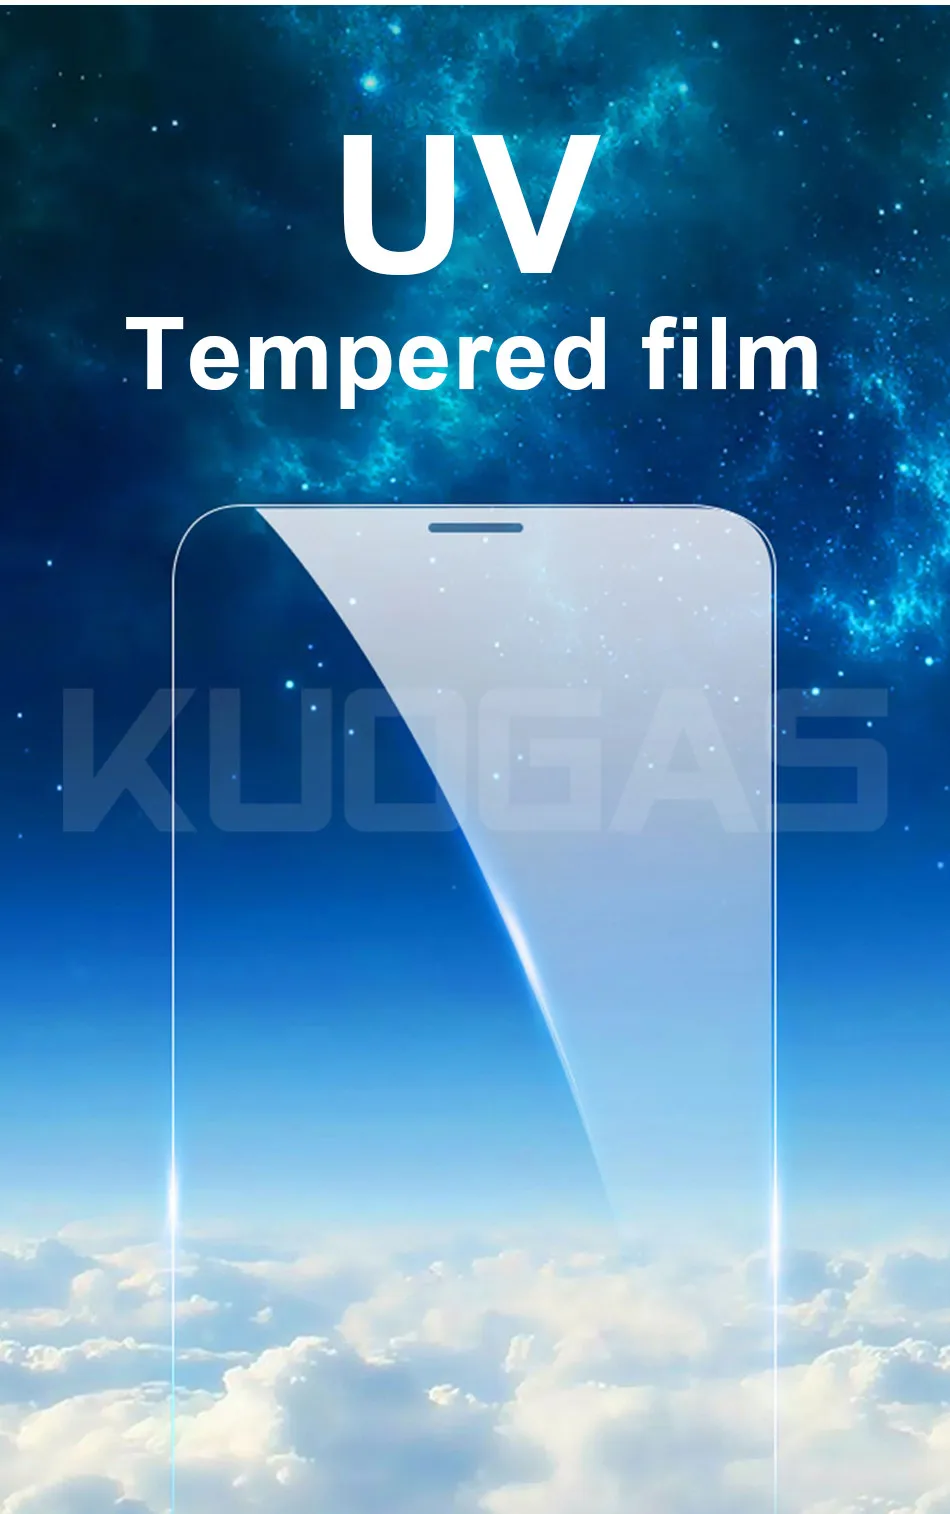 UV 100D прозрачное закаленное стекло для iPhone 6 6s 7 8 Plus Защитная пленка для iPhone 11 Pro XS Max XR X защитная пленка для экрана